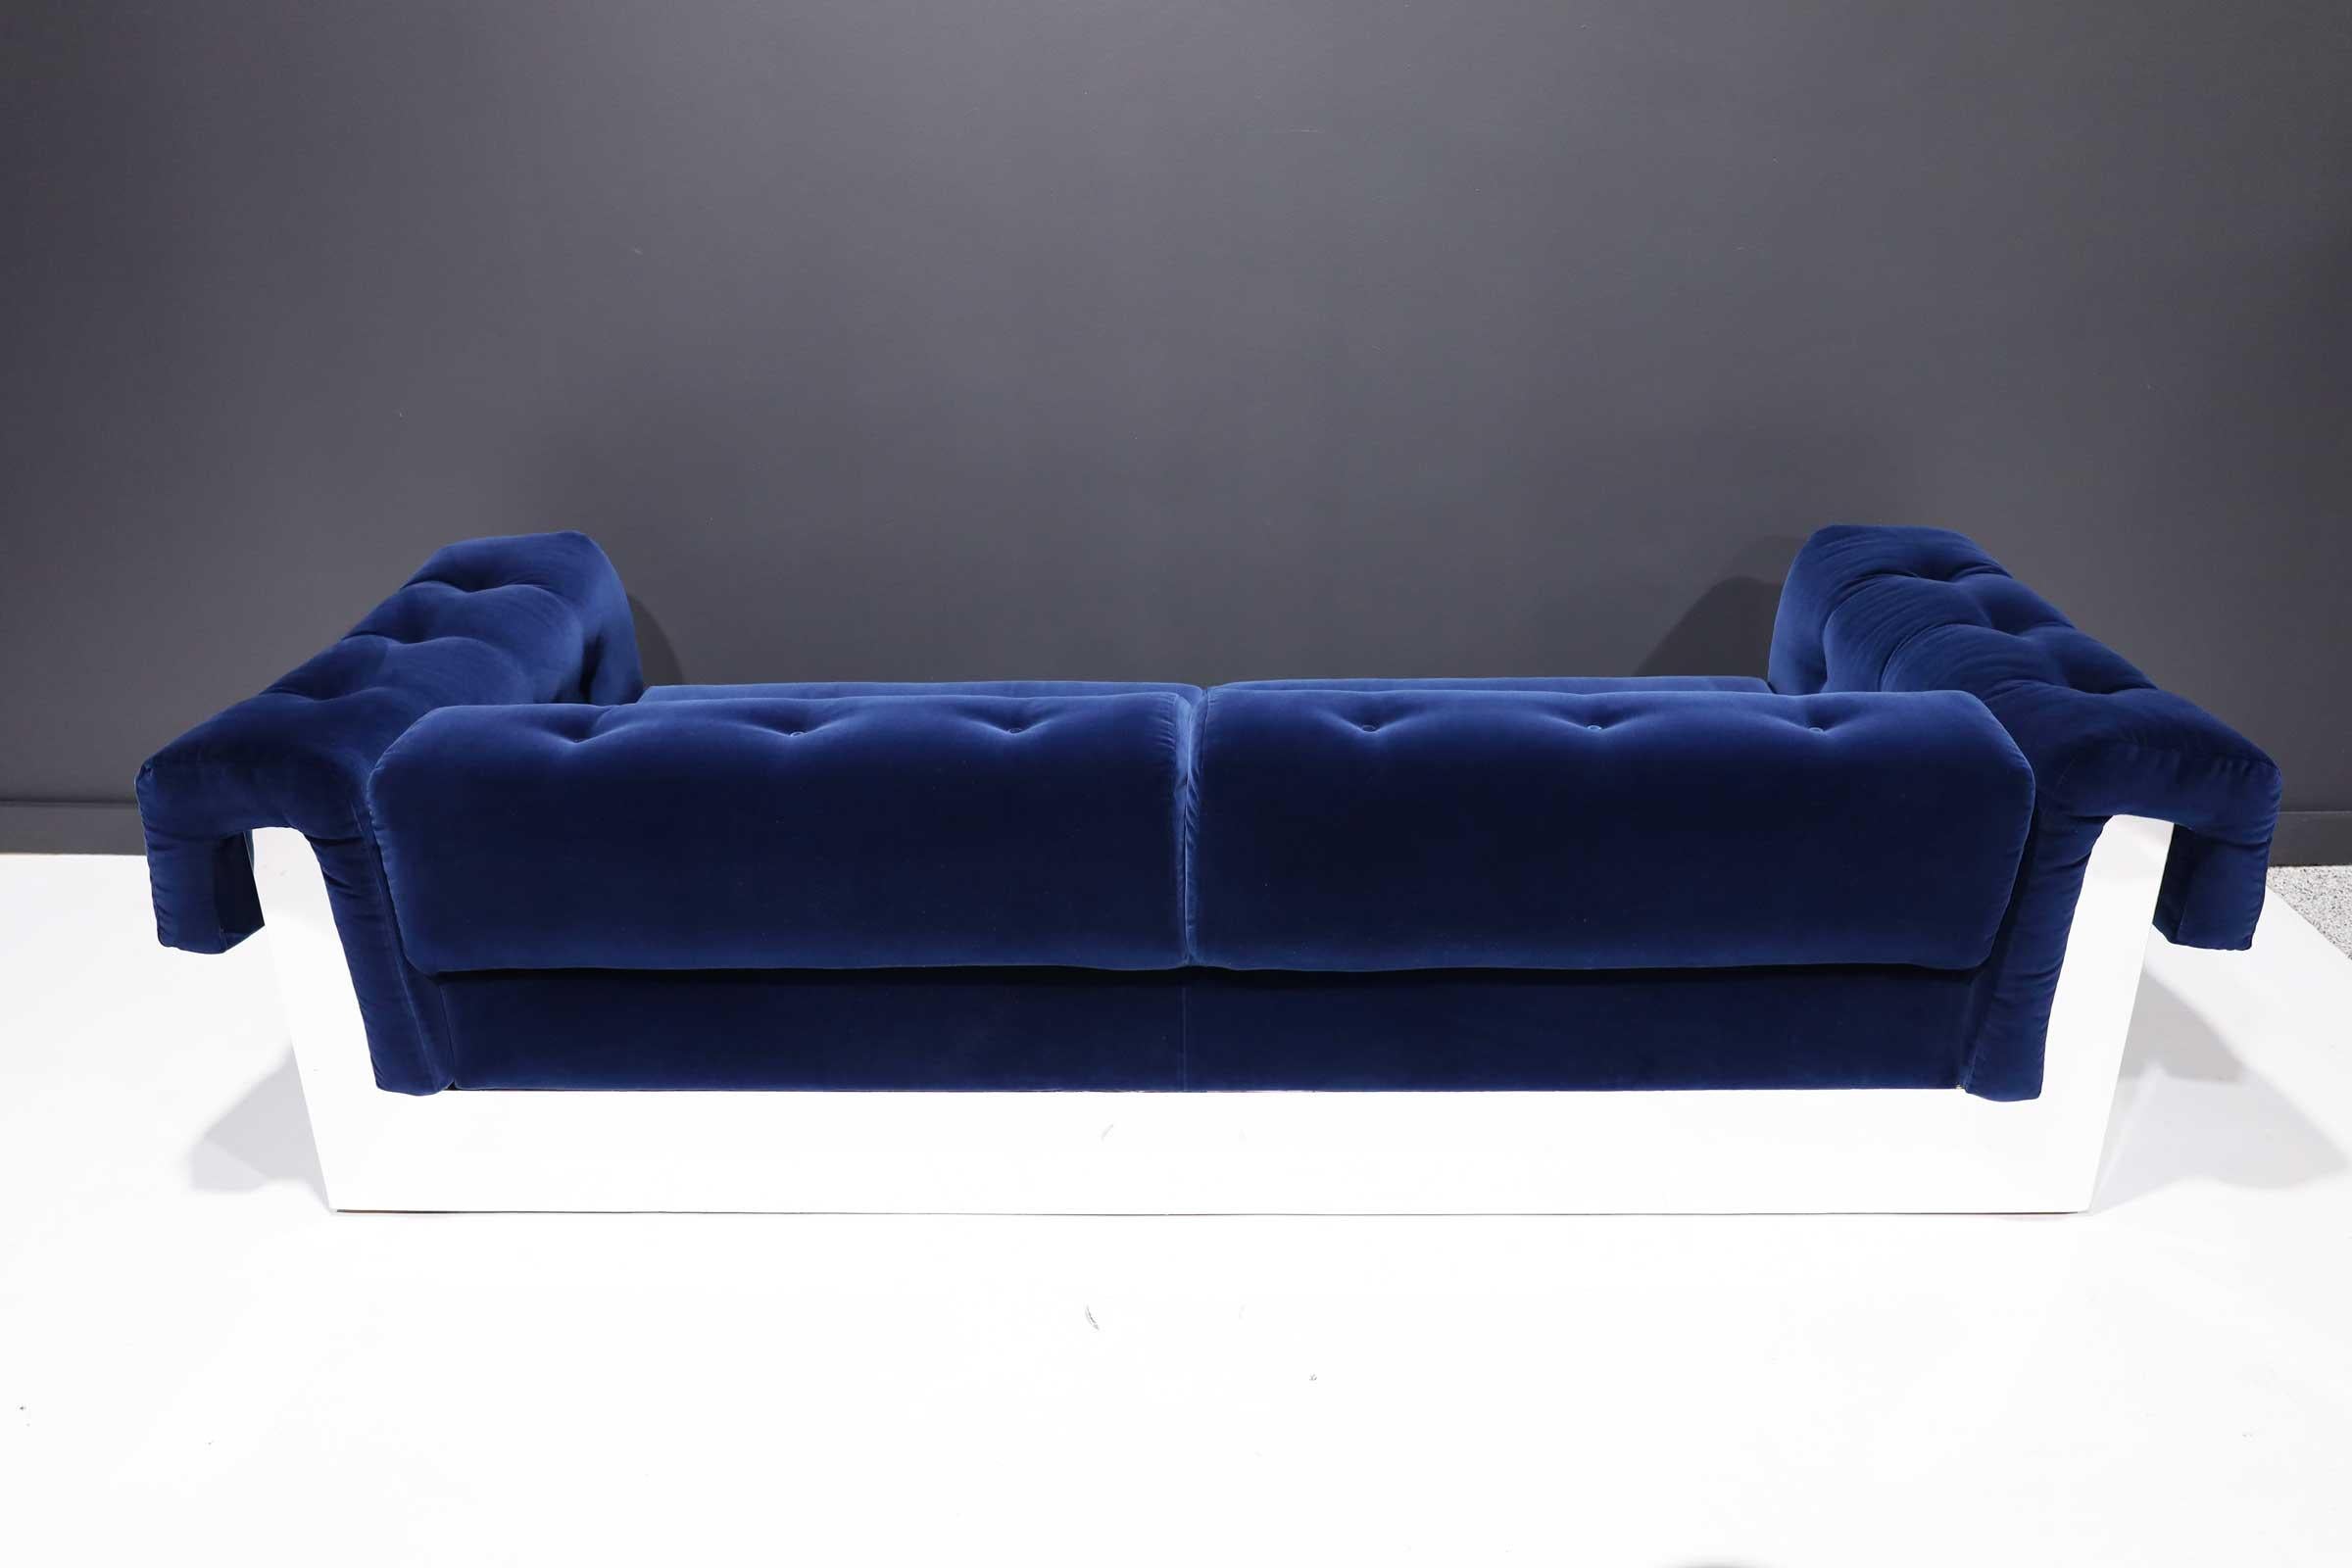 20th Century Milo Baughman Button Tufted Chrome Sofa in a Navy Blue Velvet from France